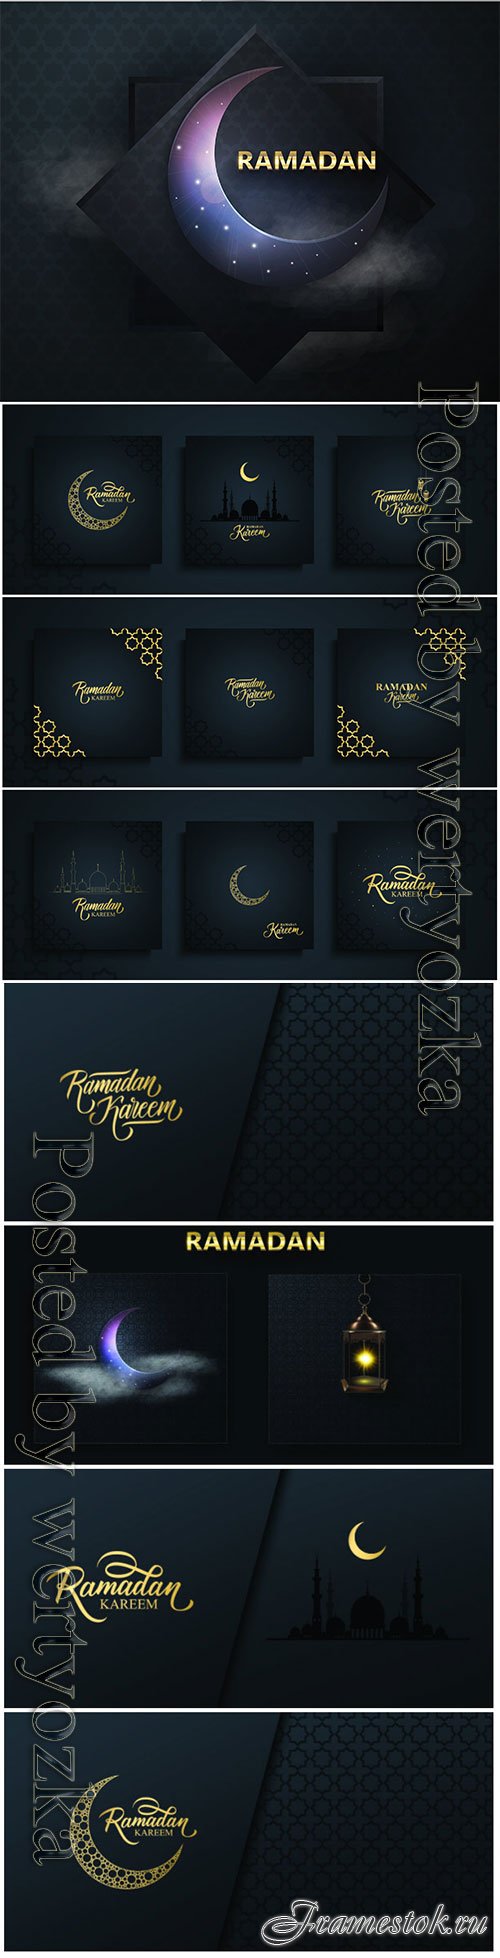 Ramadan Kareem vector background, Eid mubarak greeting card